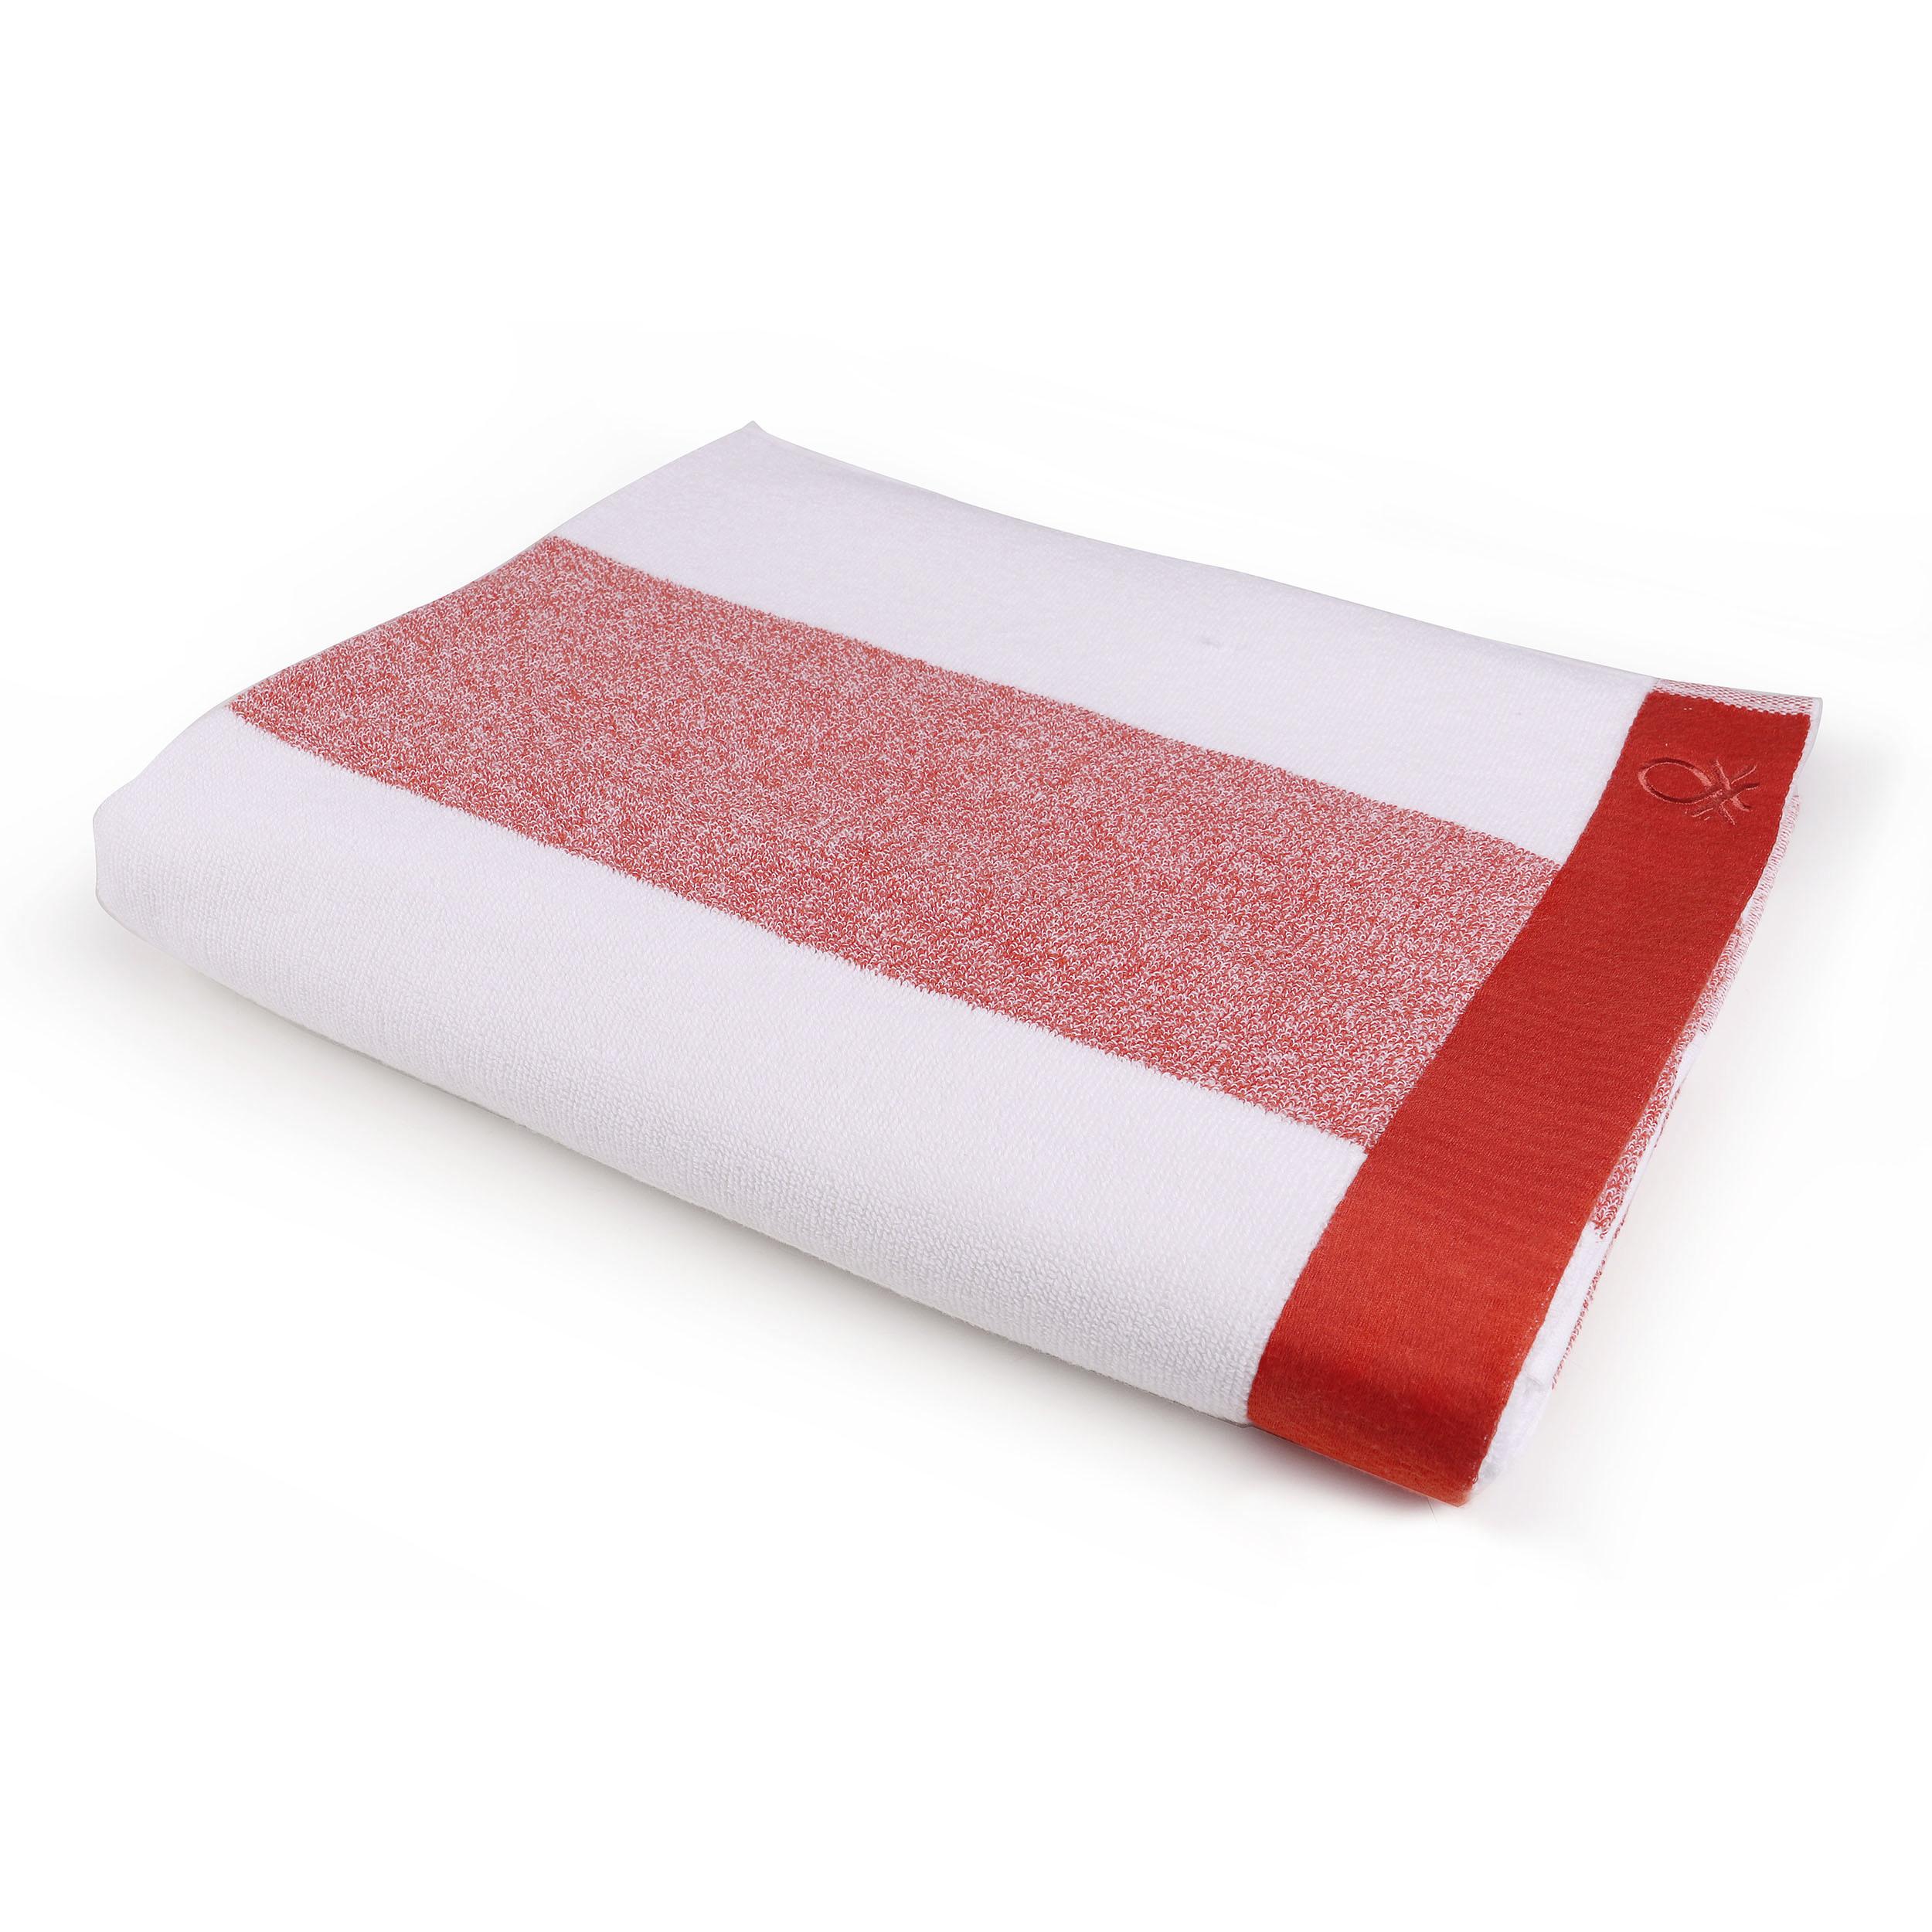 Strandtuch Baumwolle Rot/ Weiss 90x160x1,5 cm - Rot/Weiß, Basics, Textil (90/160/1.5cm) - Benetton